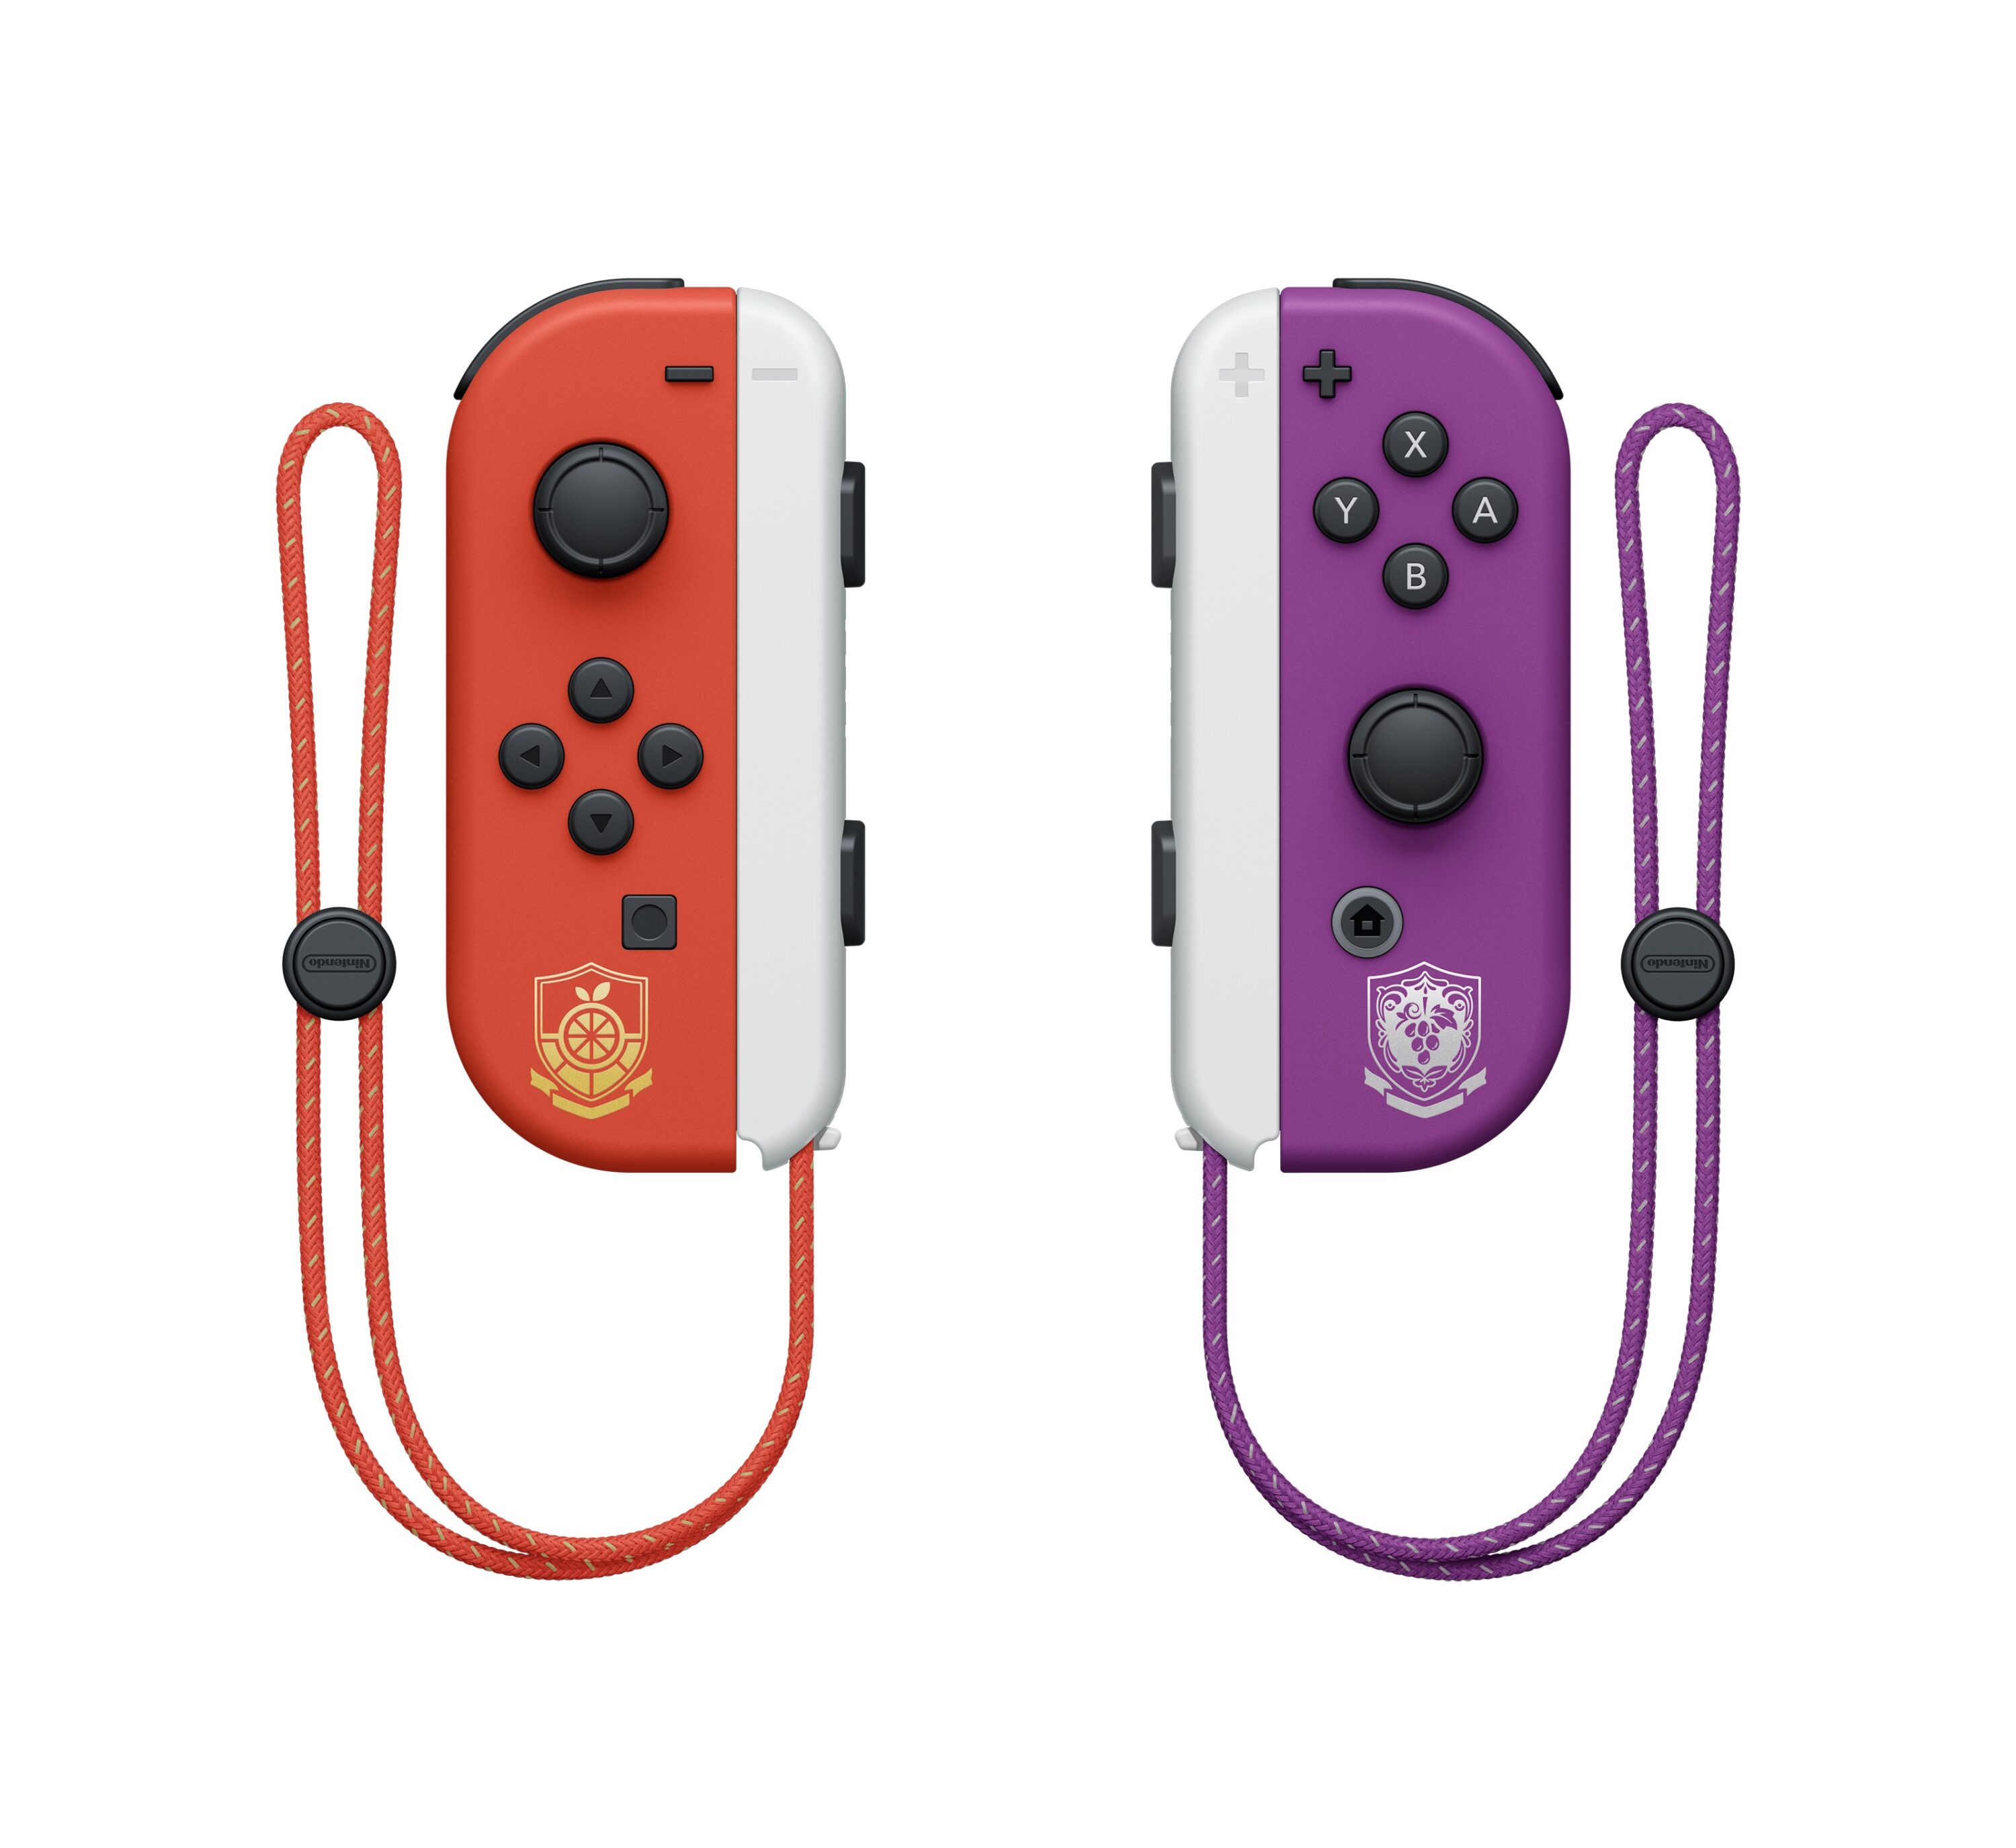 nintendo switch oled model pokemon scarlet and violet edition photo 1